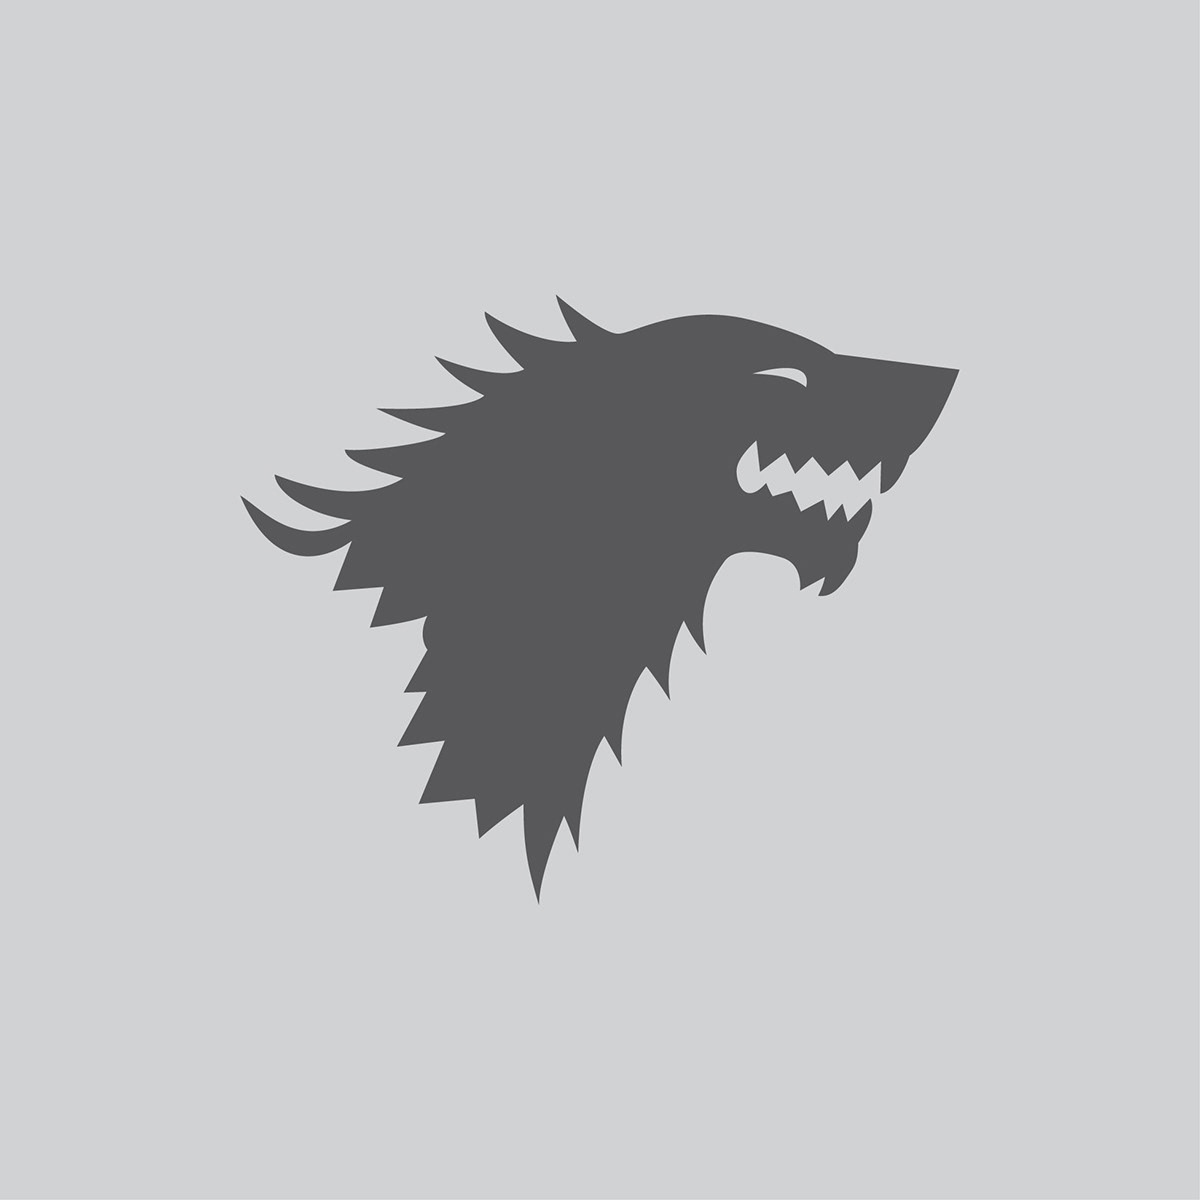 gameofthrones Game of Thrones got Stark lannister banner vector